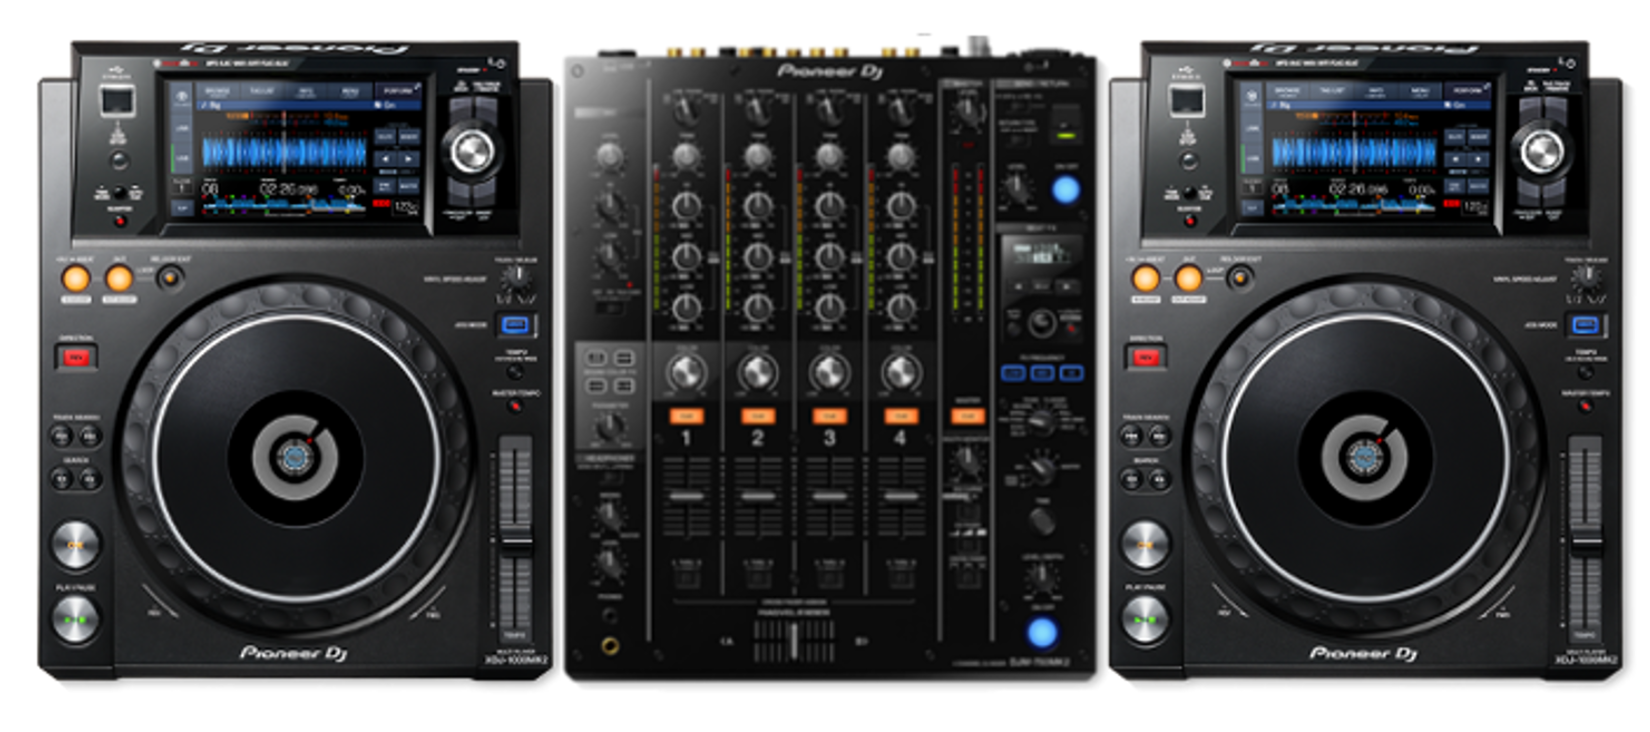 Pioneer DJ DJM-750MK2 + 2x Pioneer DJ XDJ-1000MK2 Multiplayer 